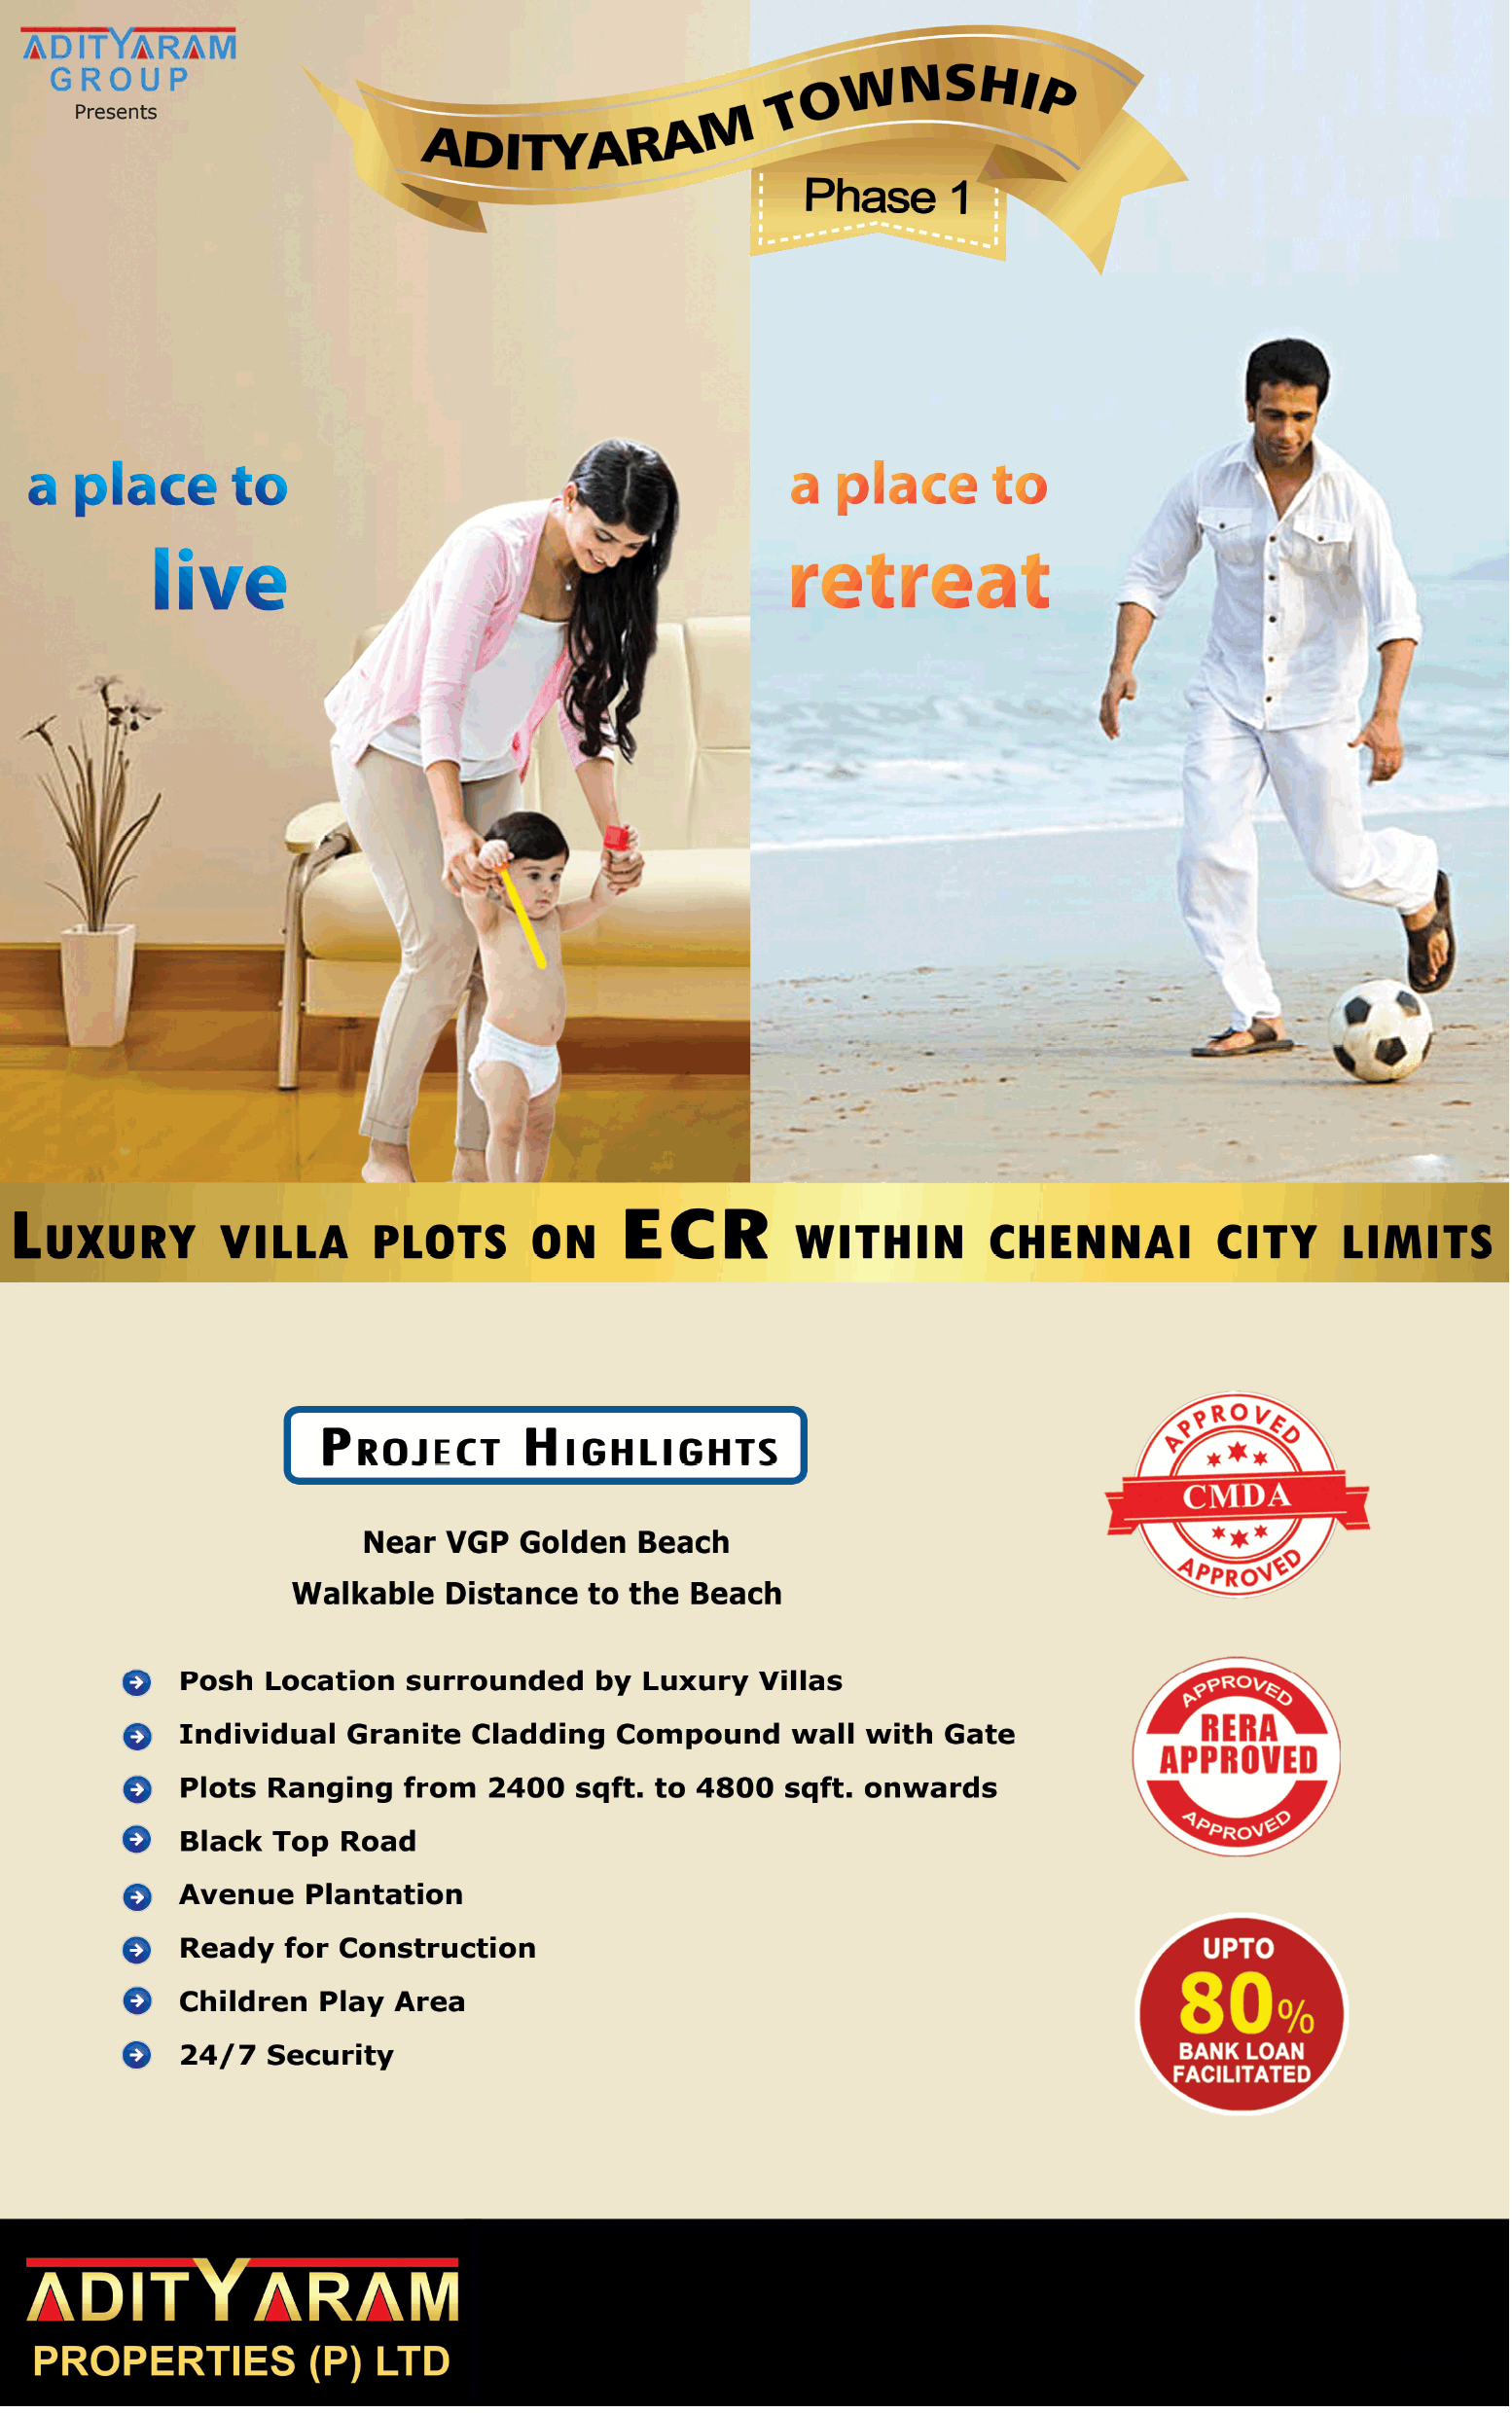 Adityaram Township Phase 1 presenting luxury villa plots on ECR within Chennai limits Update